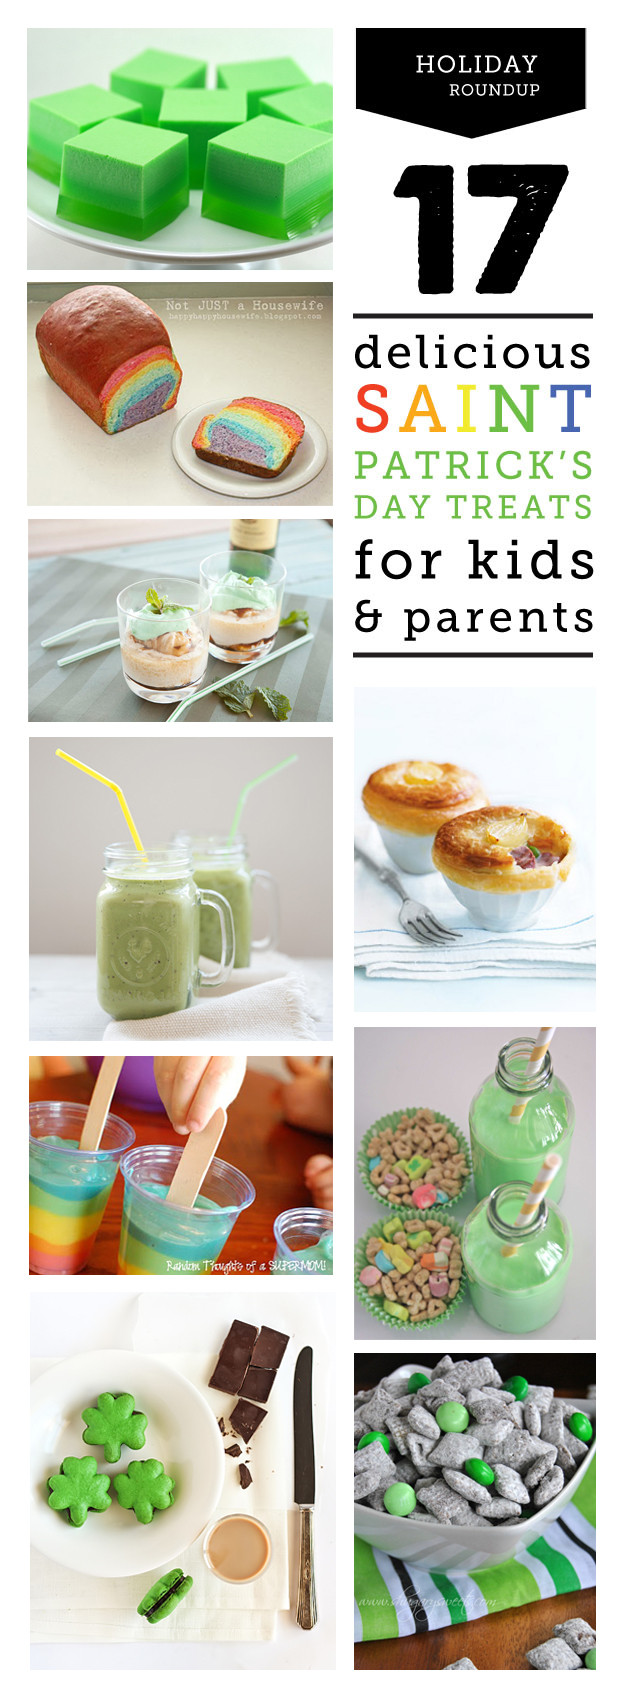 St Patricks Day Recipes For Kids
 St Patrick’s Day Recipes and Treats for Kids and Adults